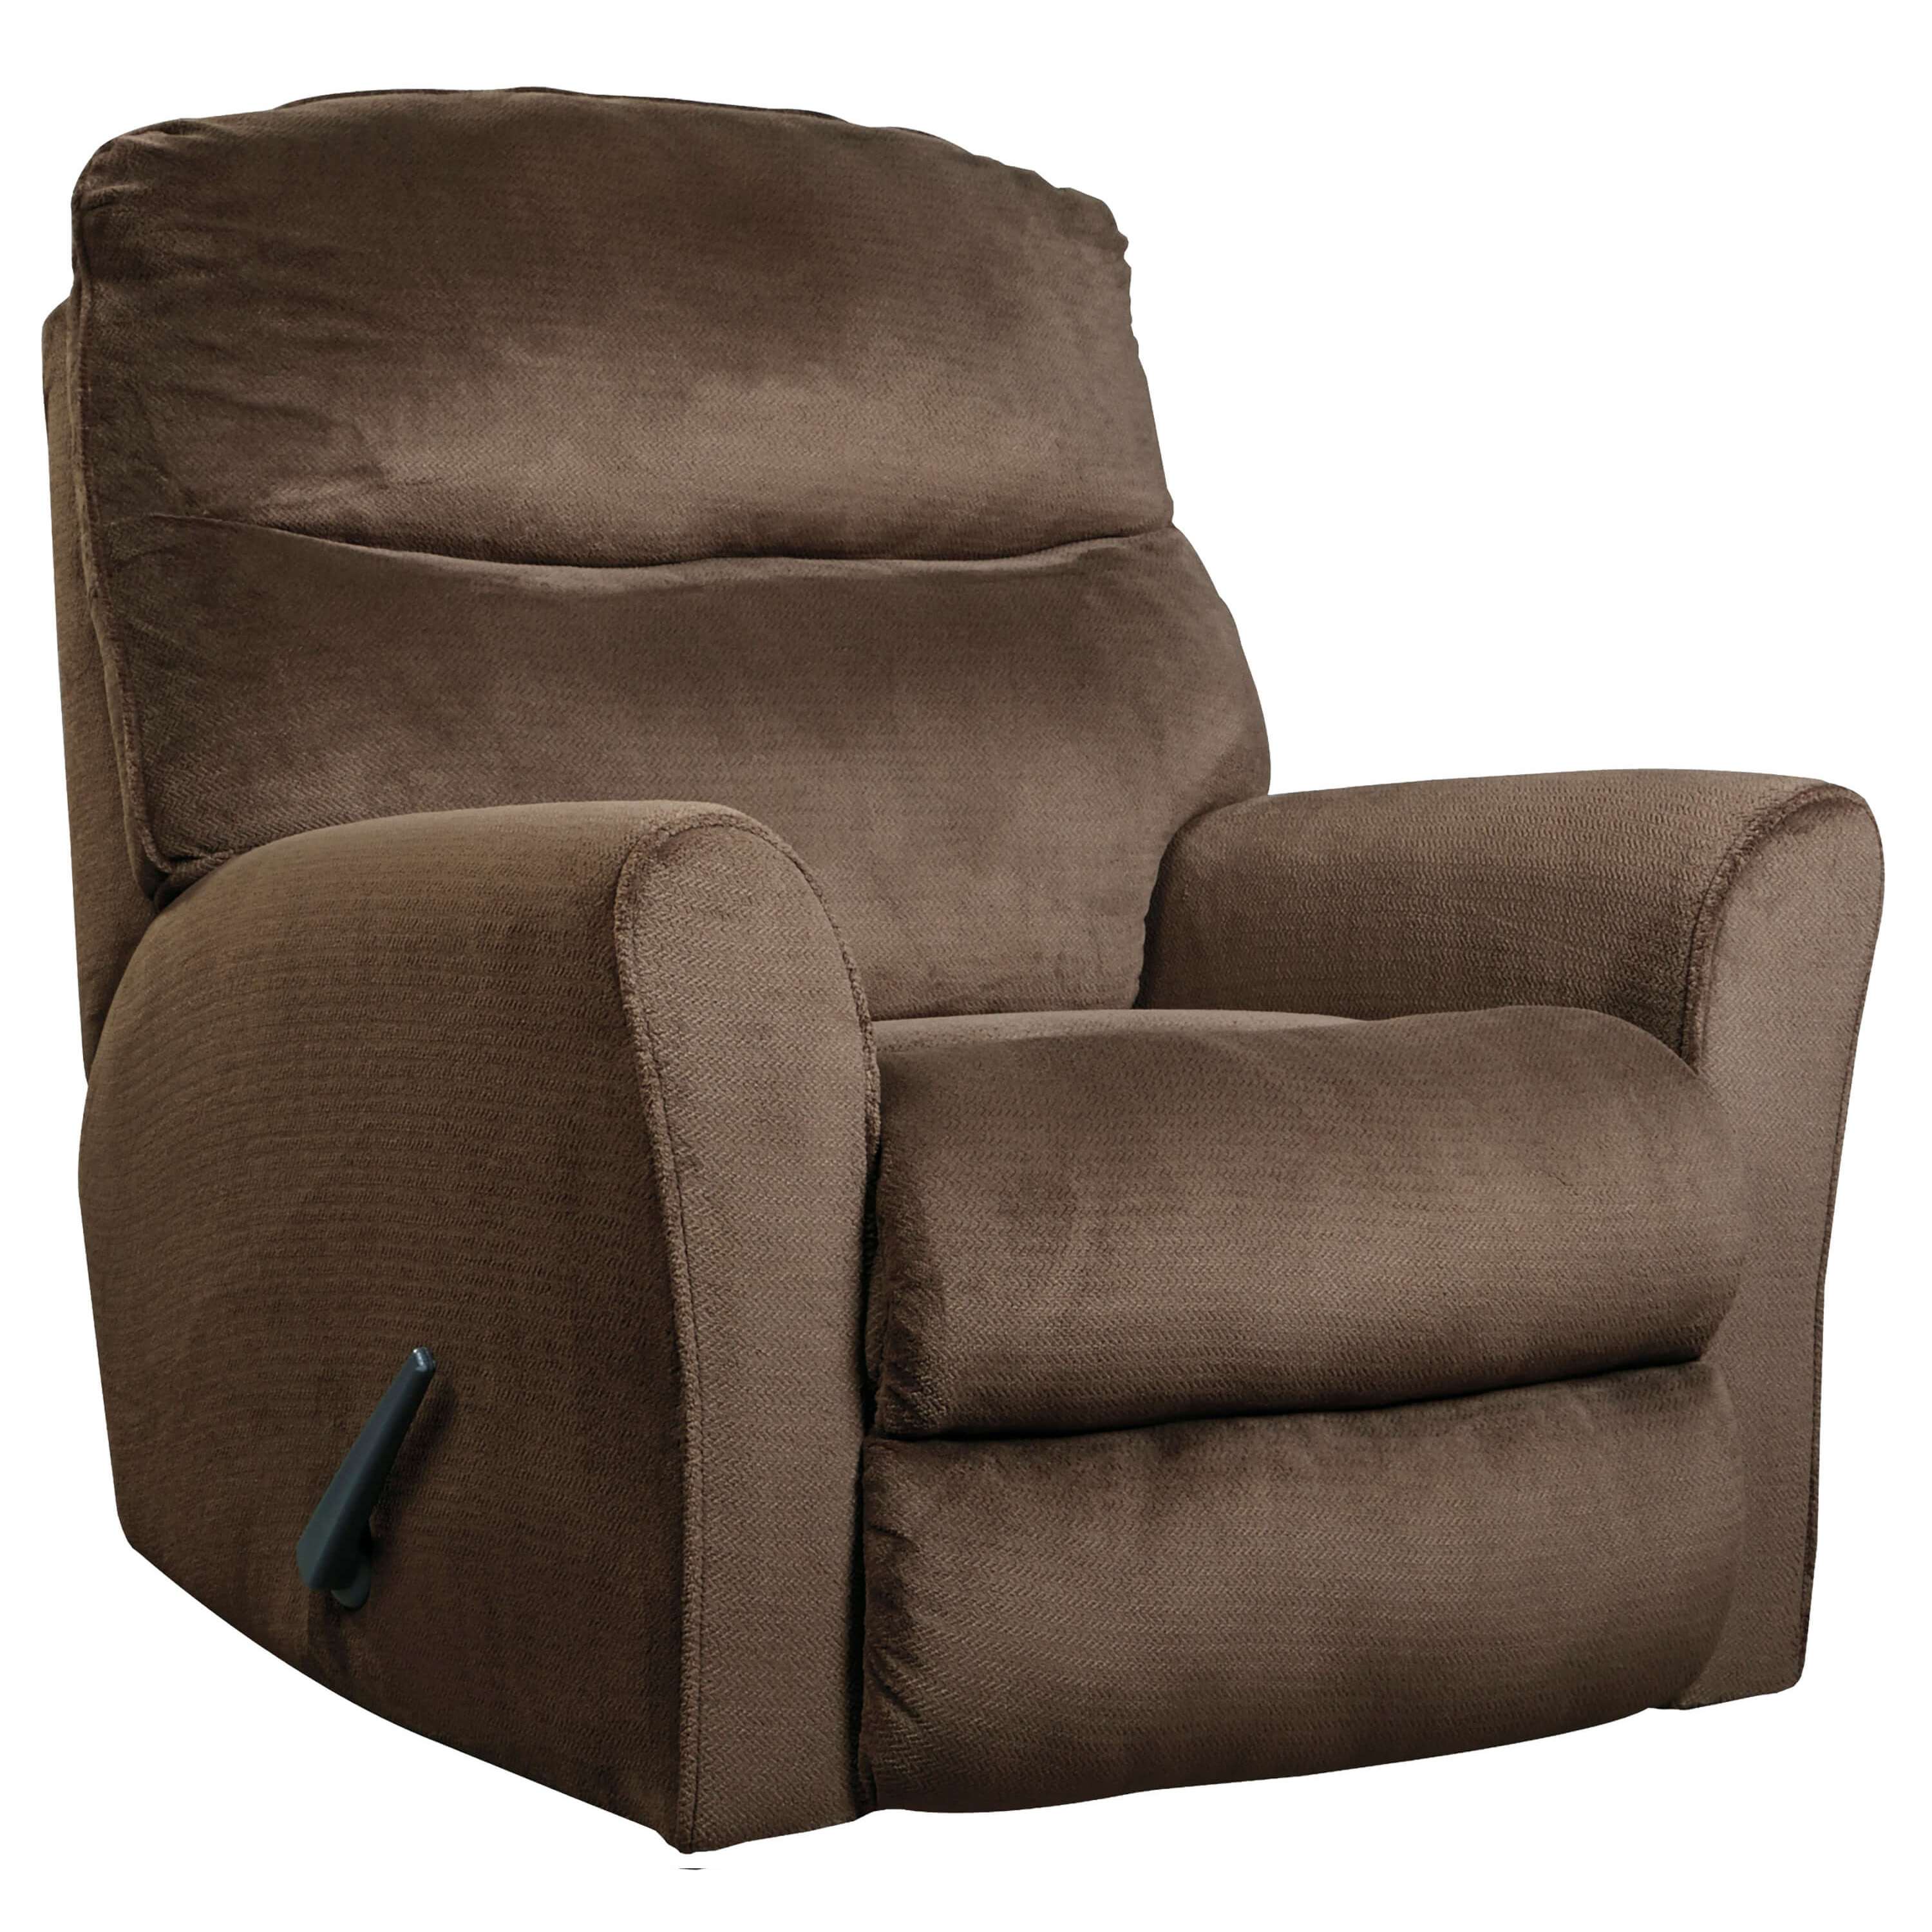 Modern recliner chair CUB FSD 1069REC CHO GG FLA